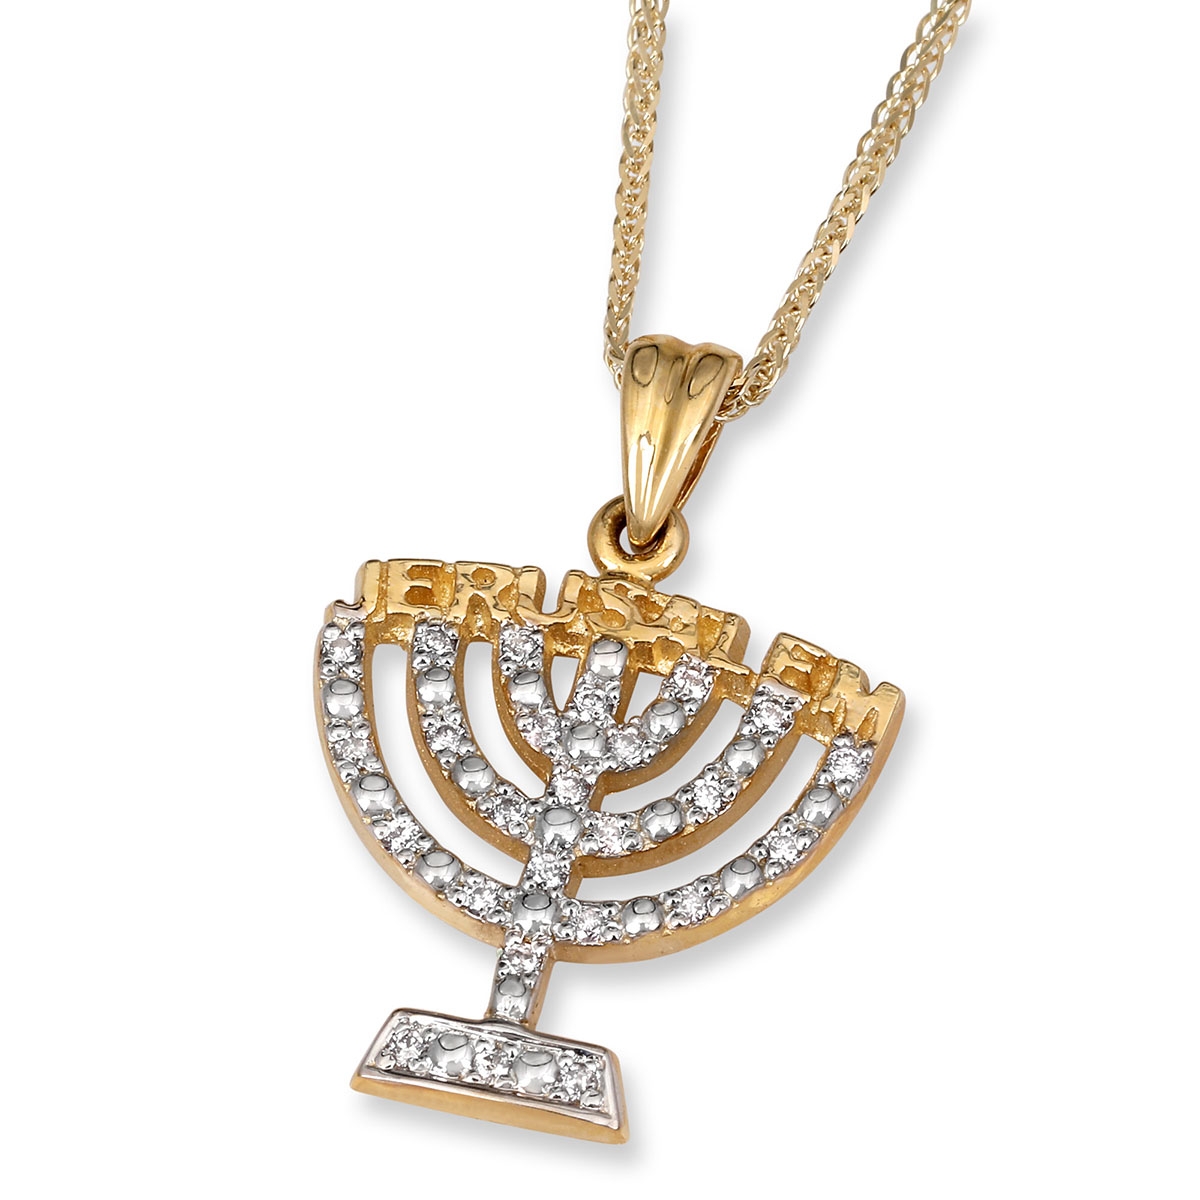 Anbinder Jewelry 14K Yellow Gold & Diamond Menorah Pendant With Jerusalem Design - 1